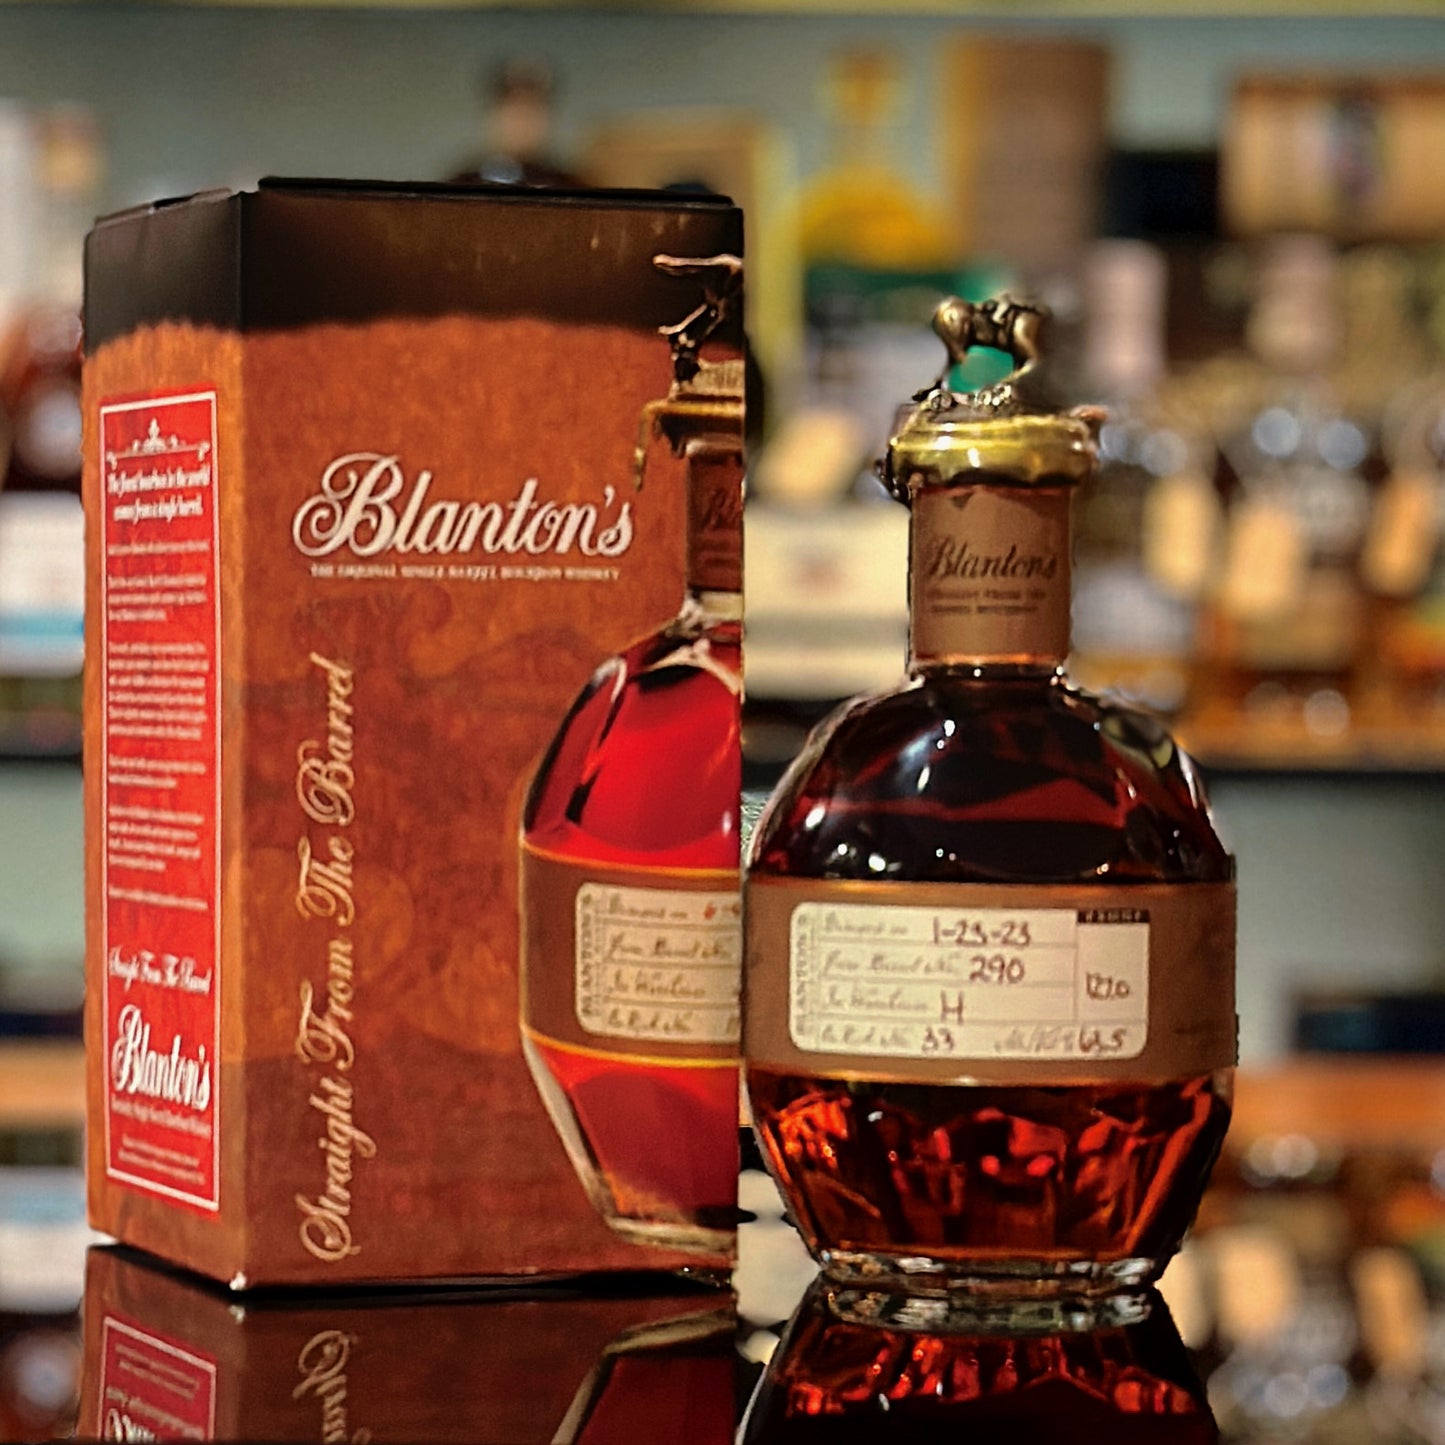 Blanton's Straight From The Barrel Bourbon Whiskey